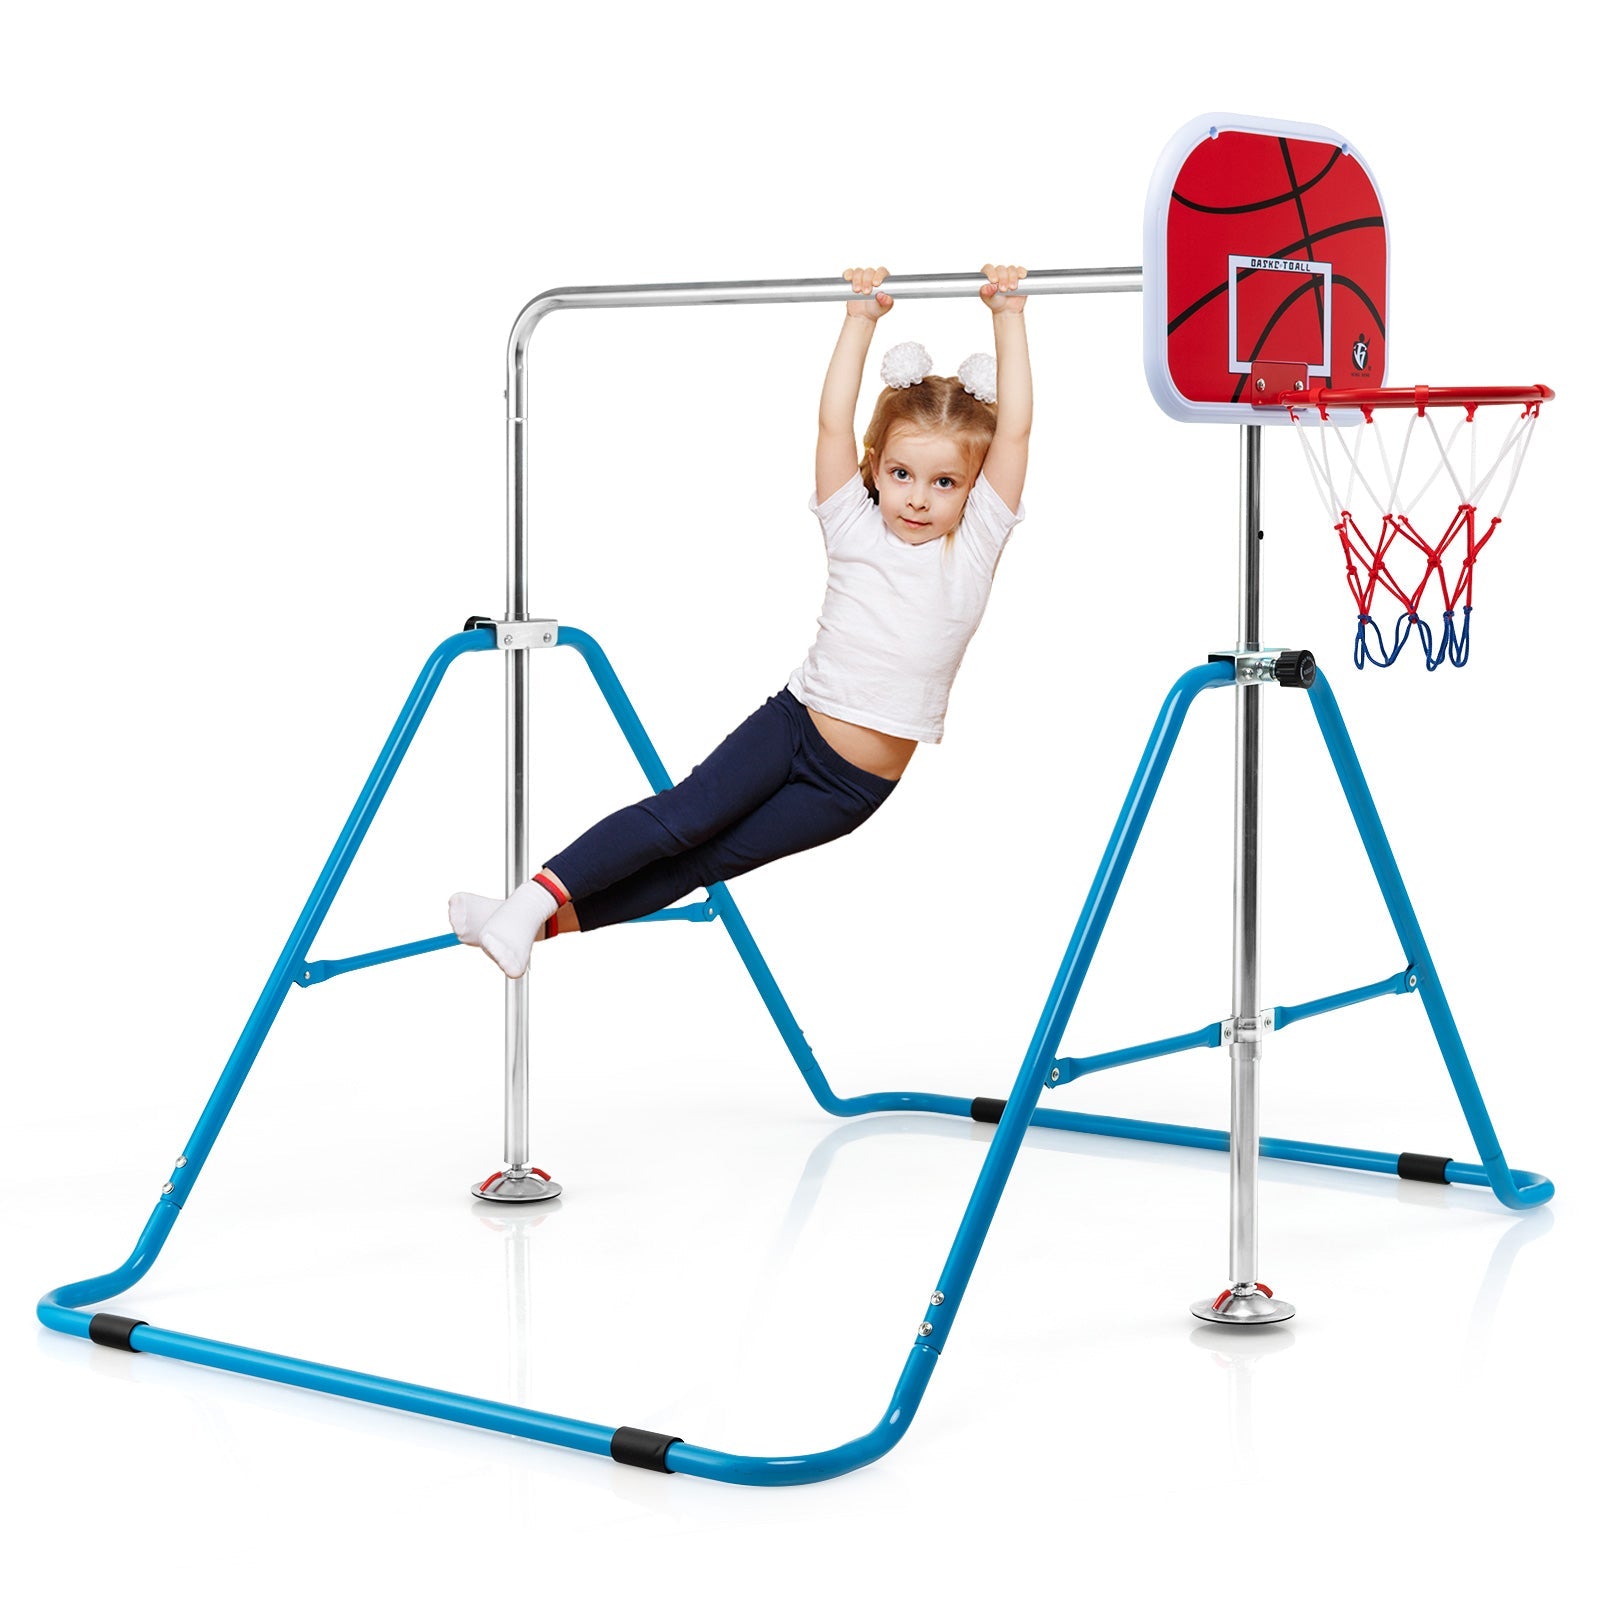 Kids Folding Gymnastics Bar with Basketball Hoop: Fun Training in Blue